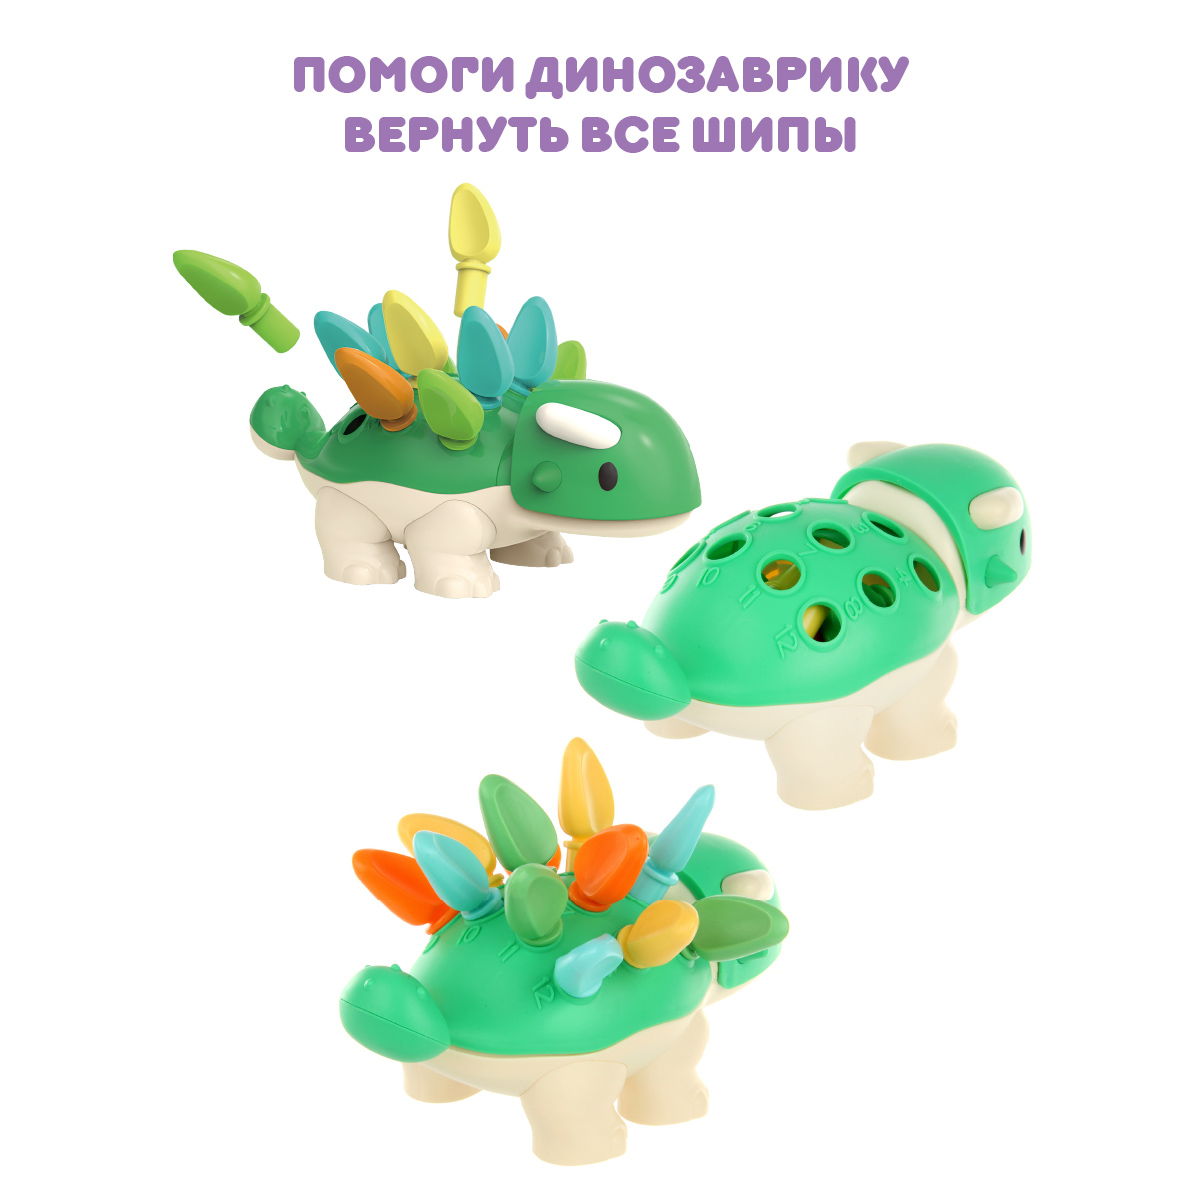 Развивающая игрушки Ути Пути сортер Динозаврик Веня - фото 3